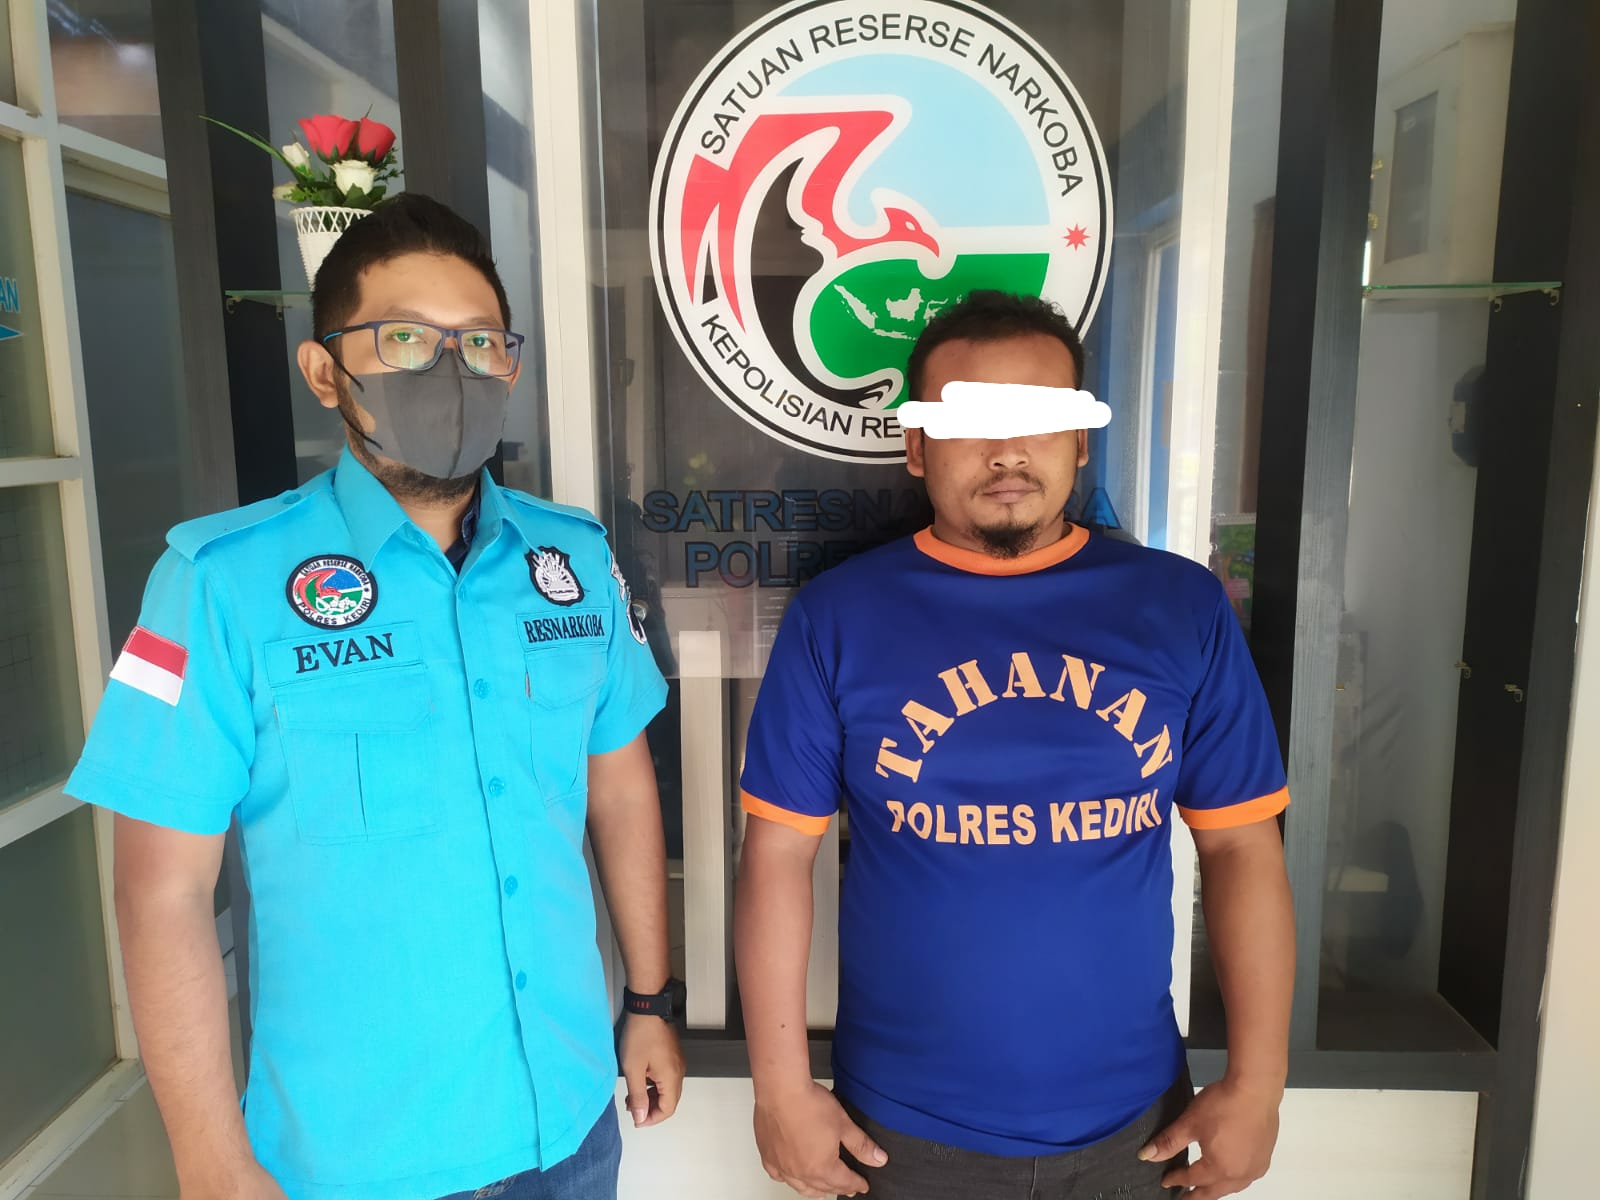 Terduga pengedar Narkoba AS (29) warga Desa Purwokerto, Kecamatan Ngadiluwih, Kabupaten Kediri yang kini mendekam di jeruji besi Polres Kediri.